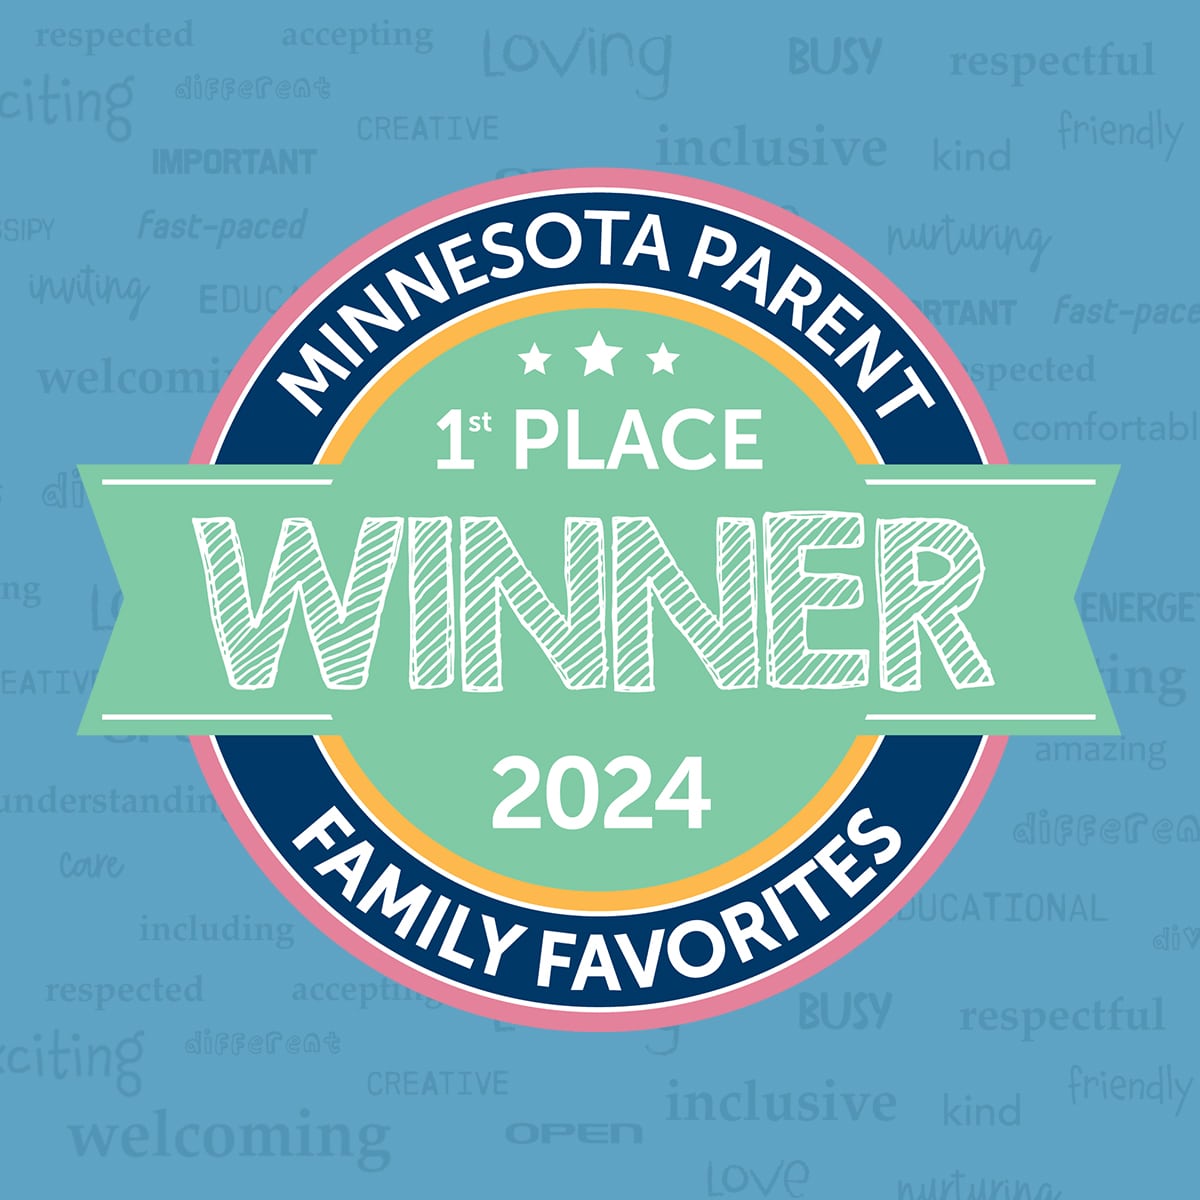 New Horizon Academy named Minnesota Parent's #1 Family Favorite Preschool and Childcare Center